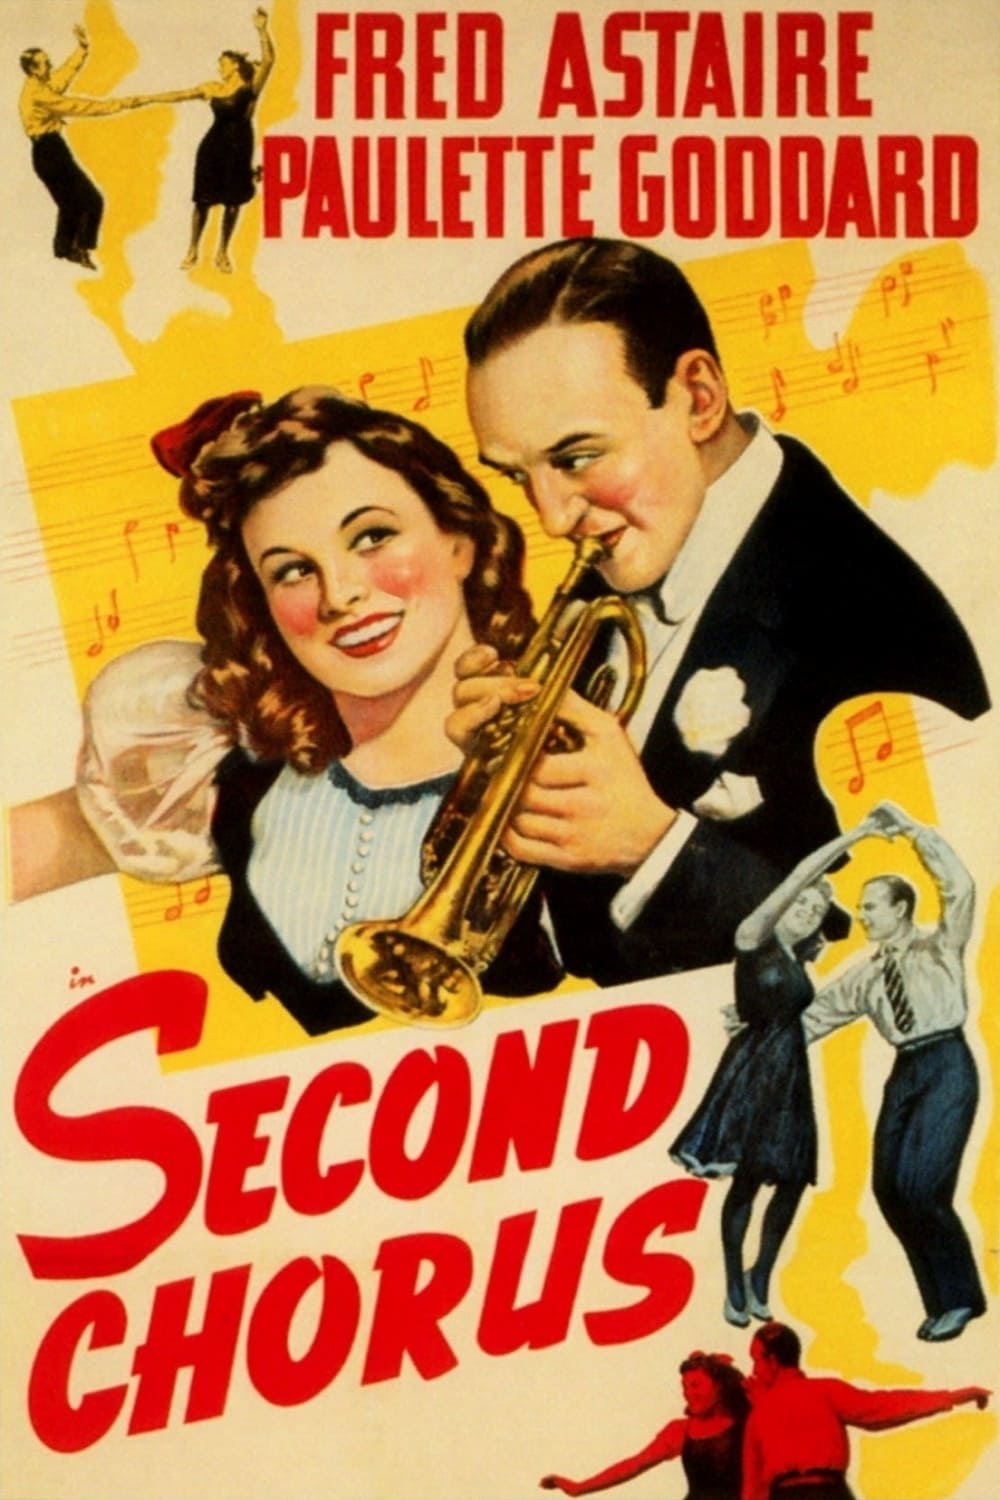 Second Chorus (1941)